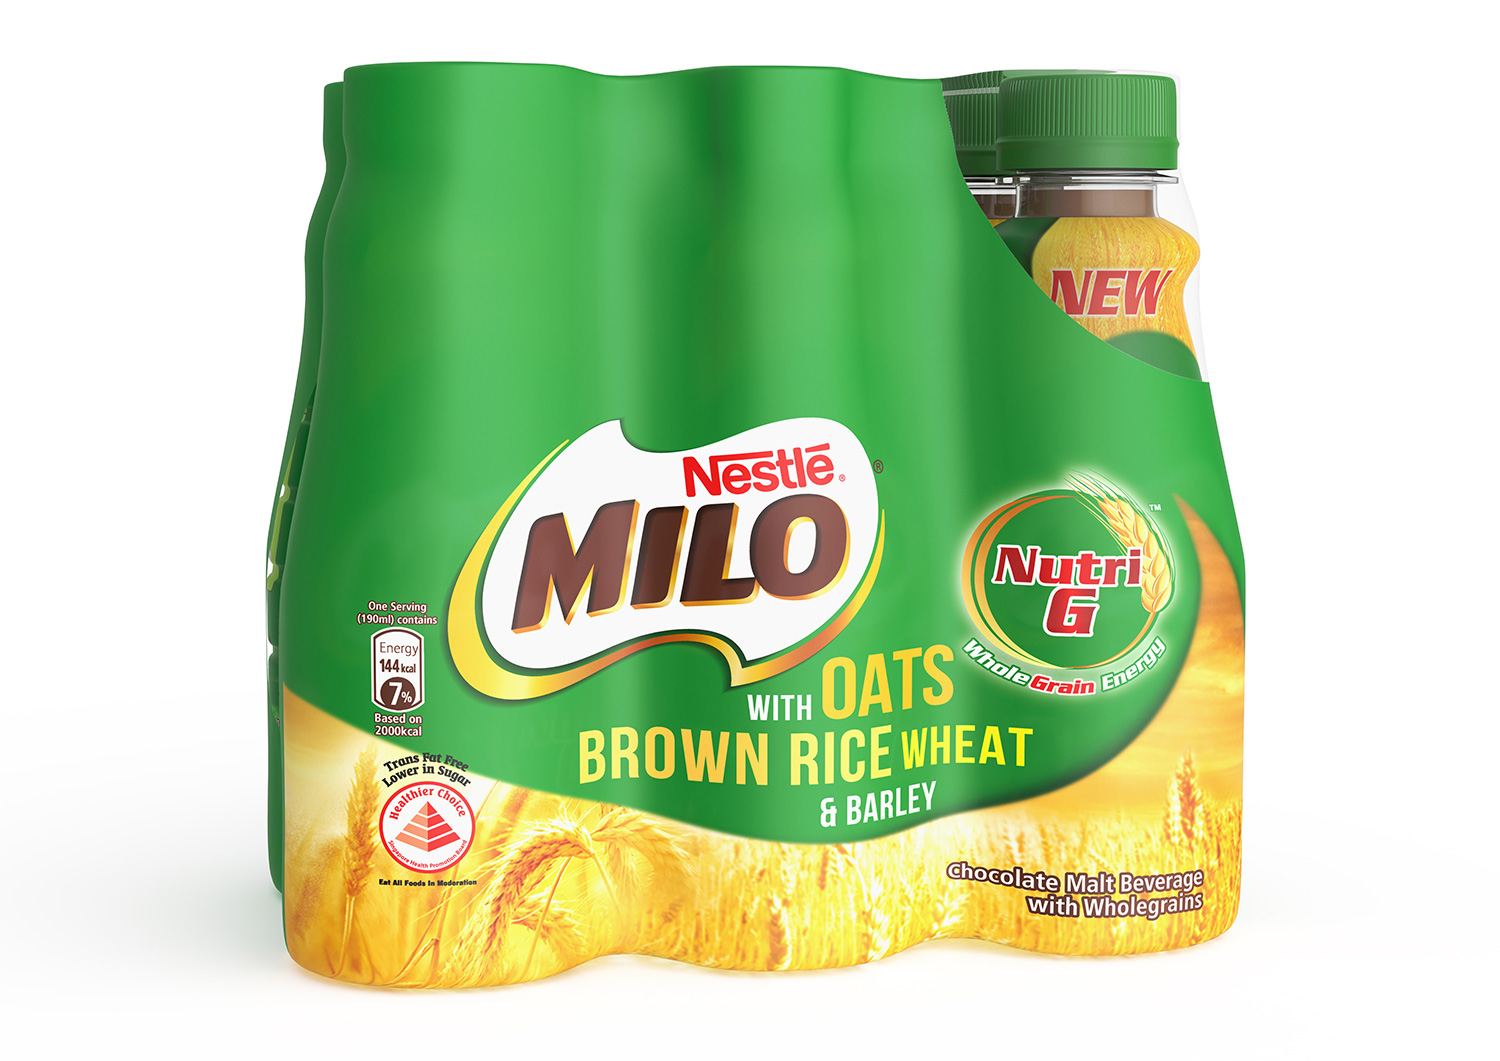 Milo-Nutri-G-PET-190ml-Bottle-Wrap-6x6